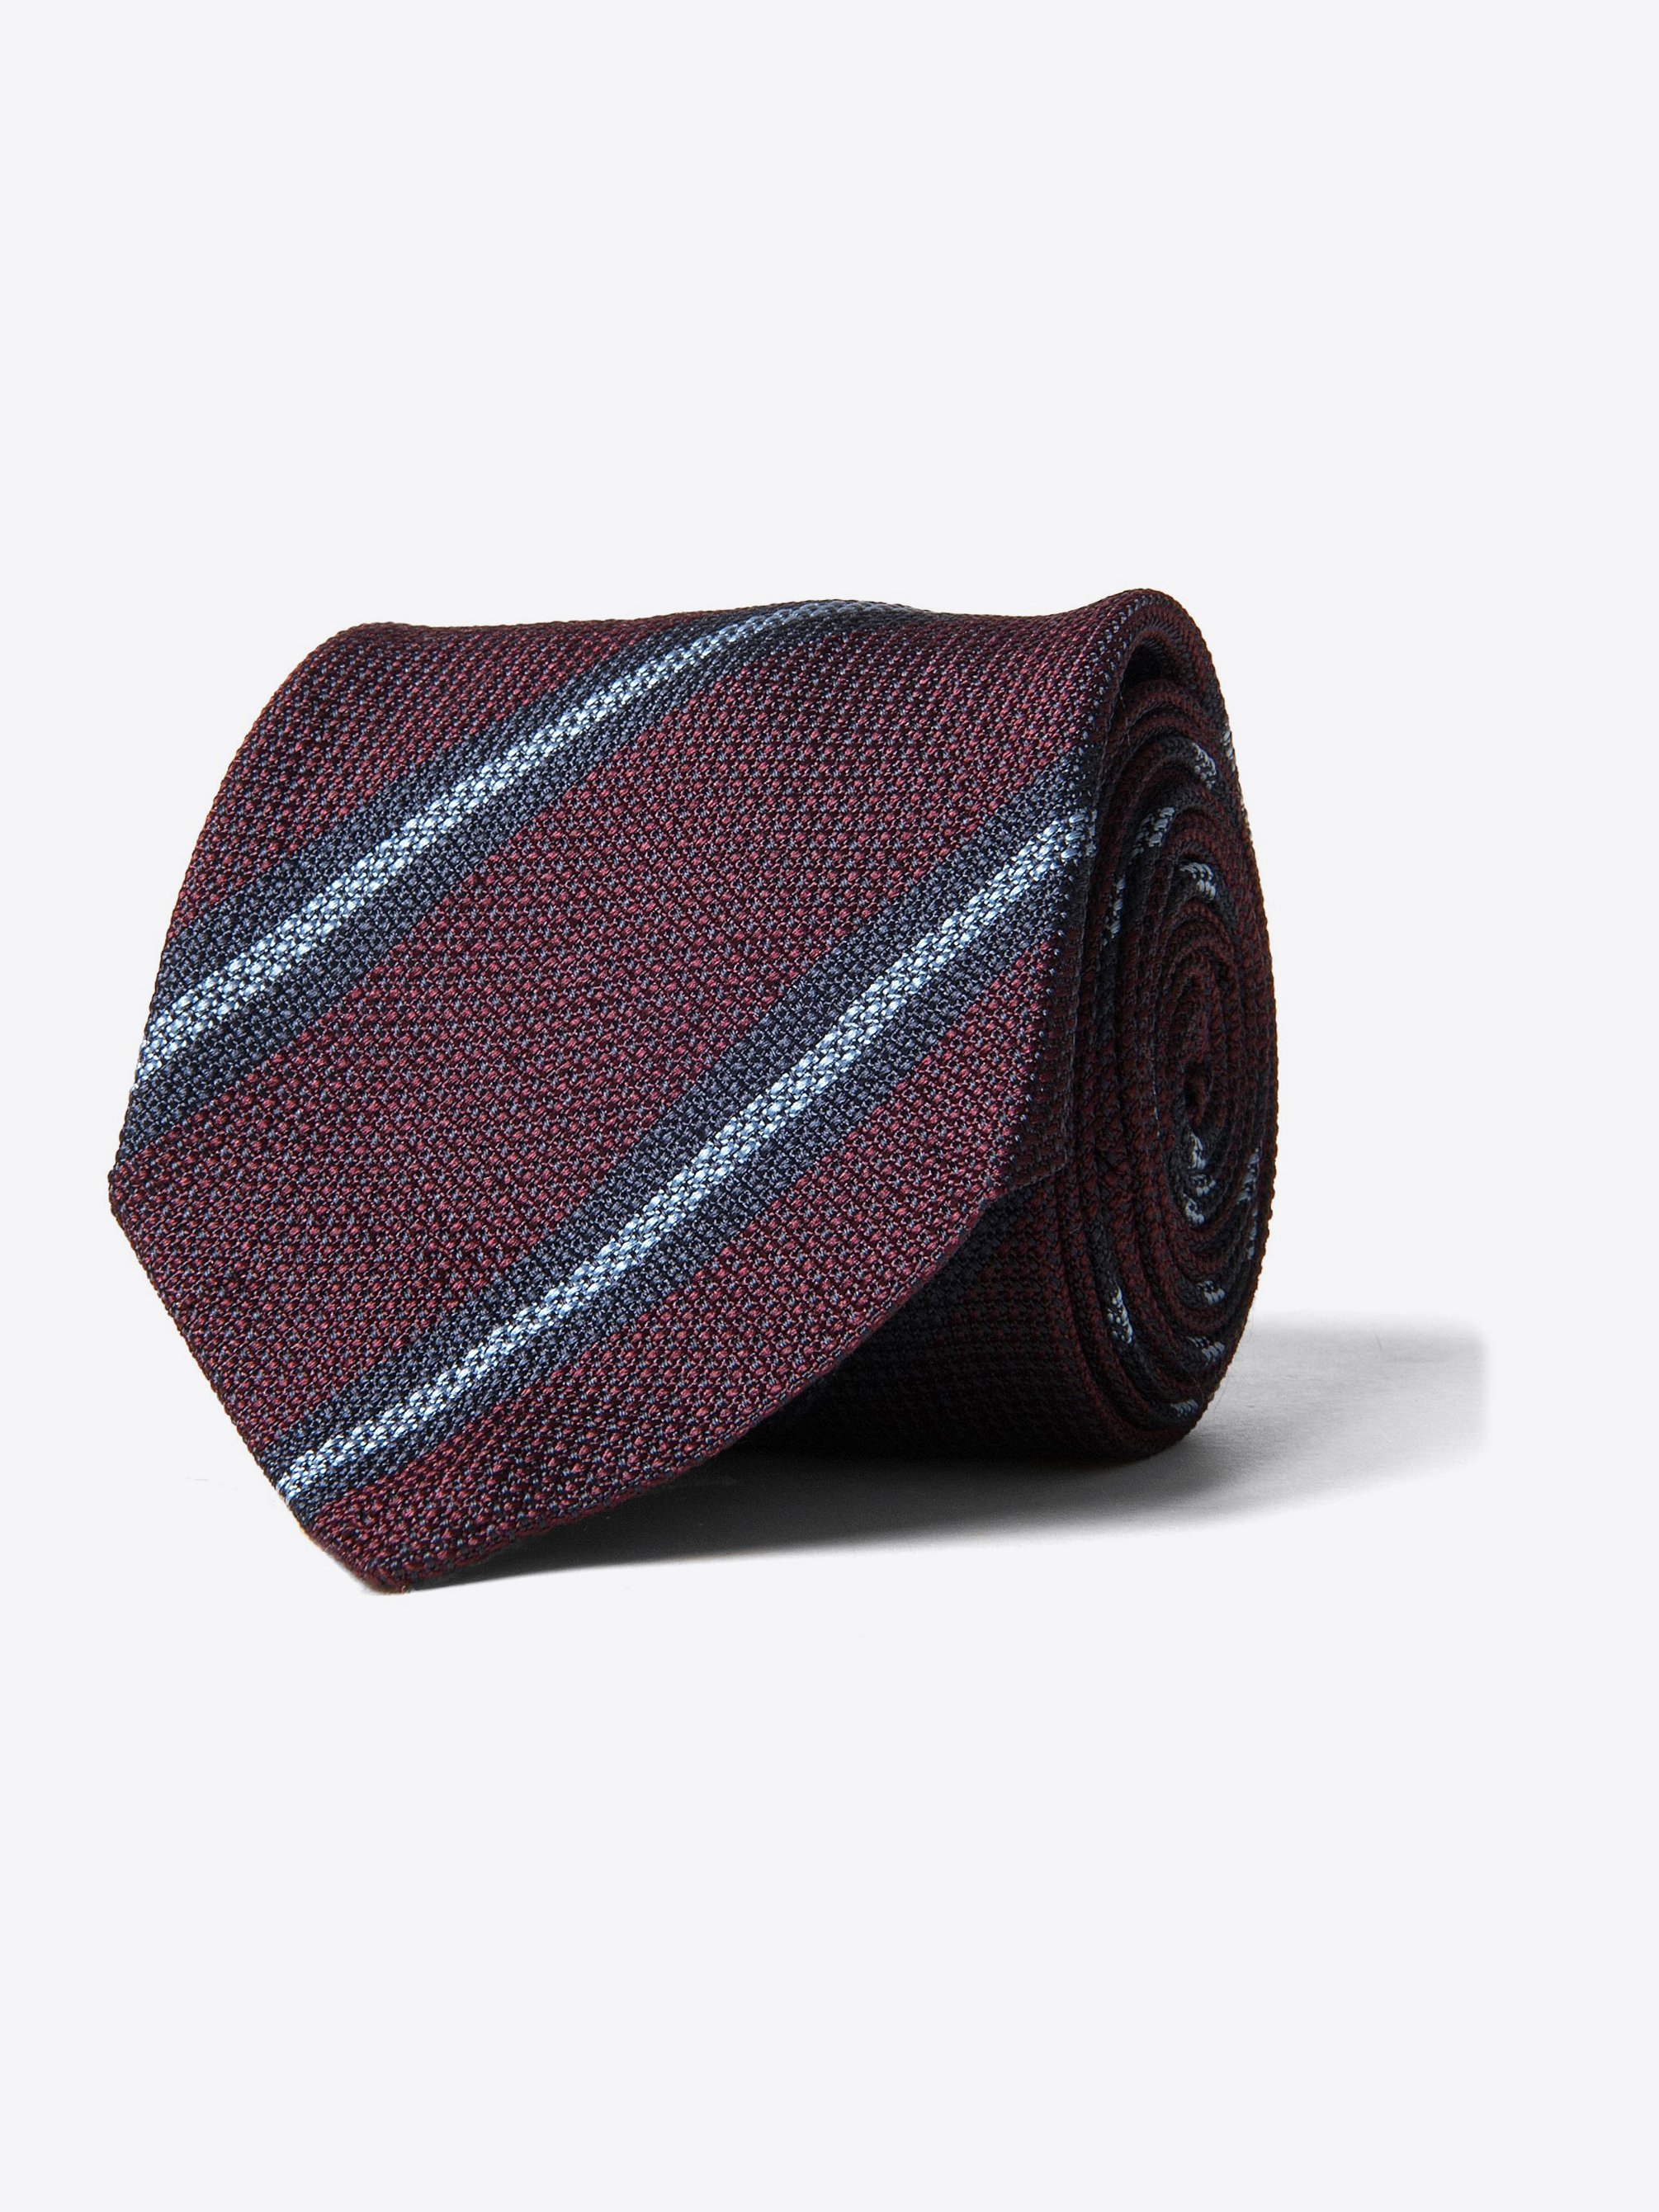 Zoom Image of Burgundy and Blue Striped Silk Grenadine Tie